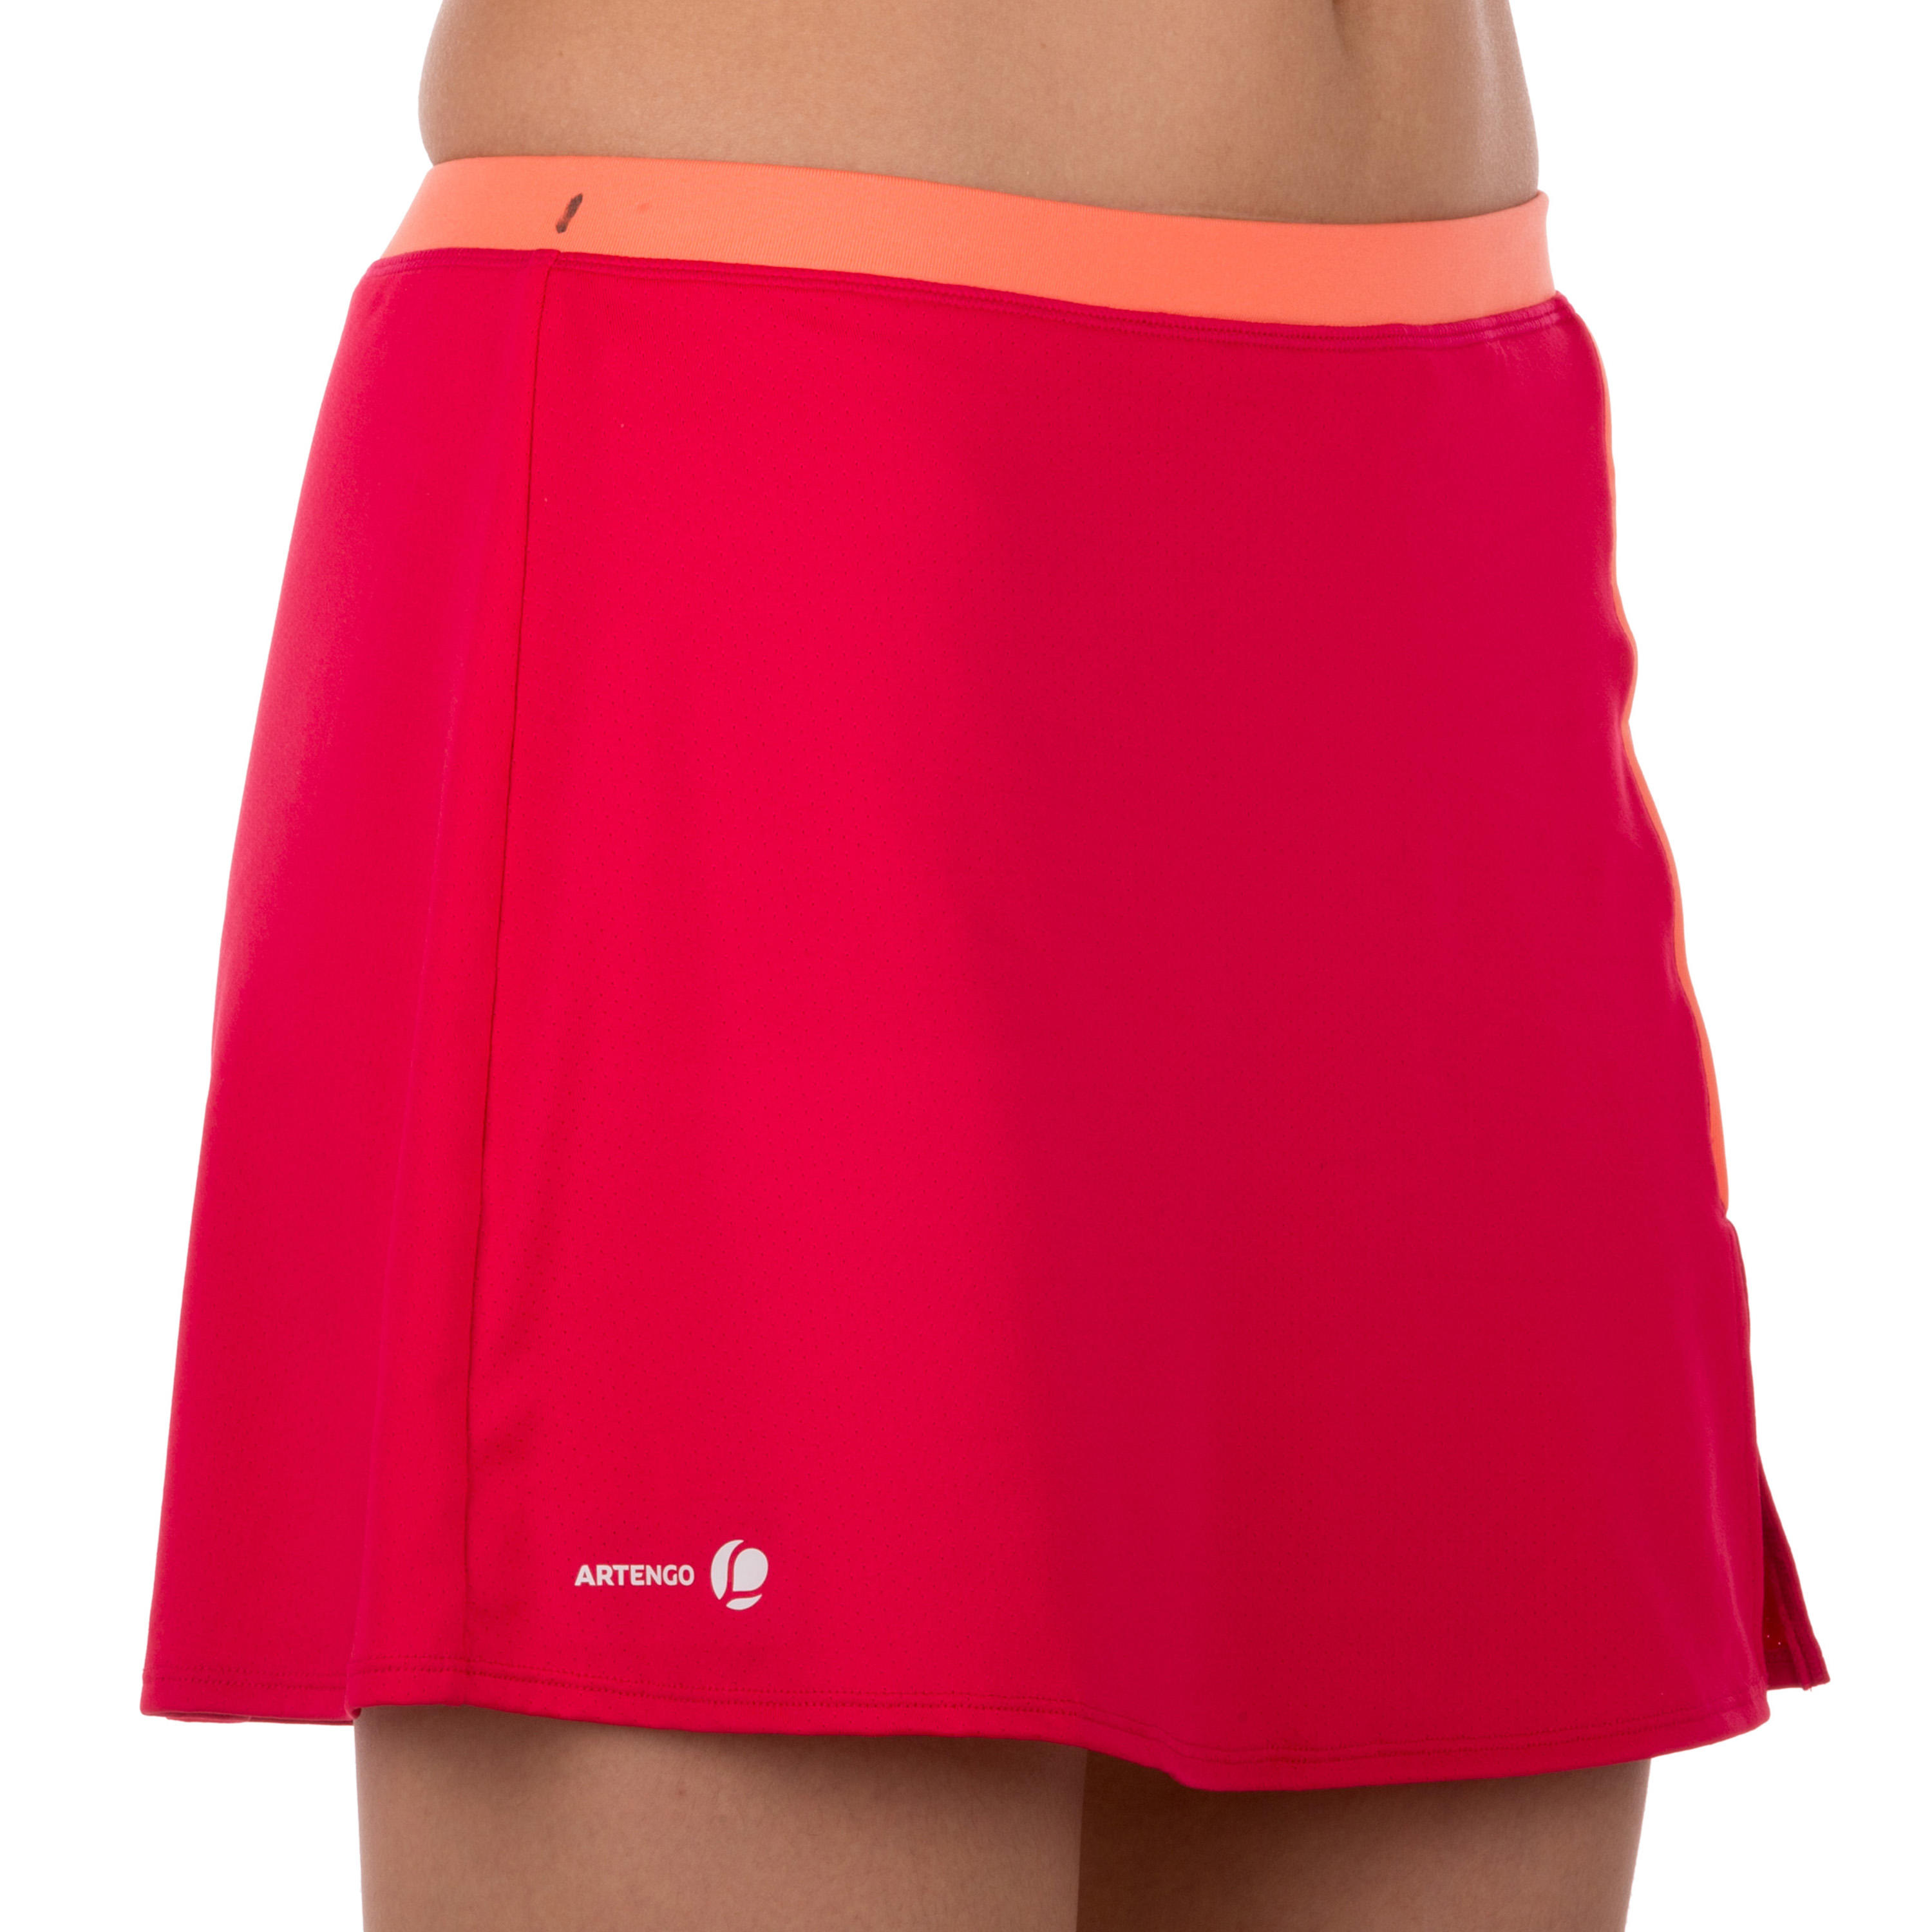 Soft Women's Tennis Badminton Table Tennis Squash Padel Skirt - Pink/Orange 3/6